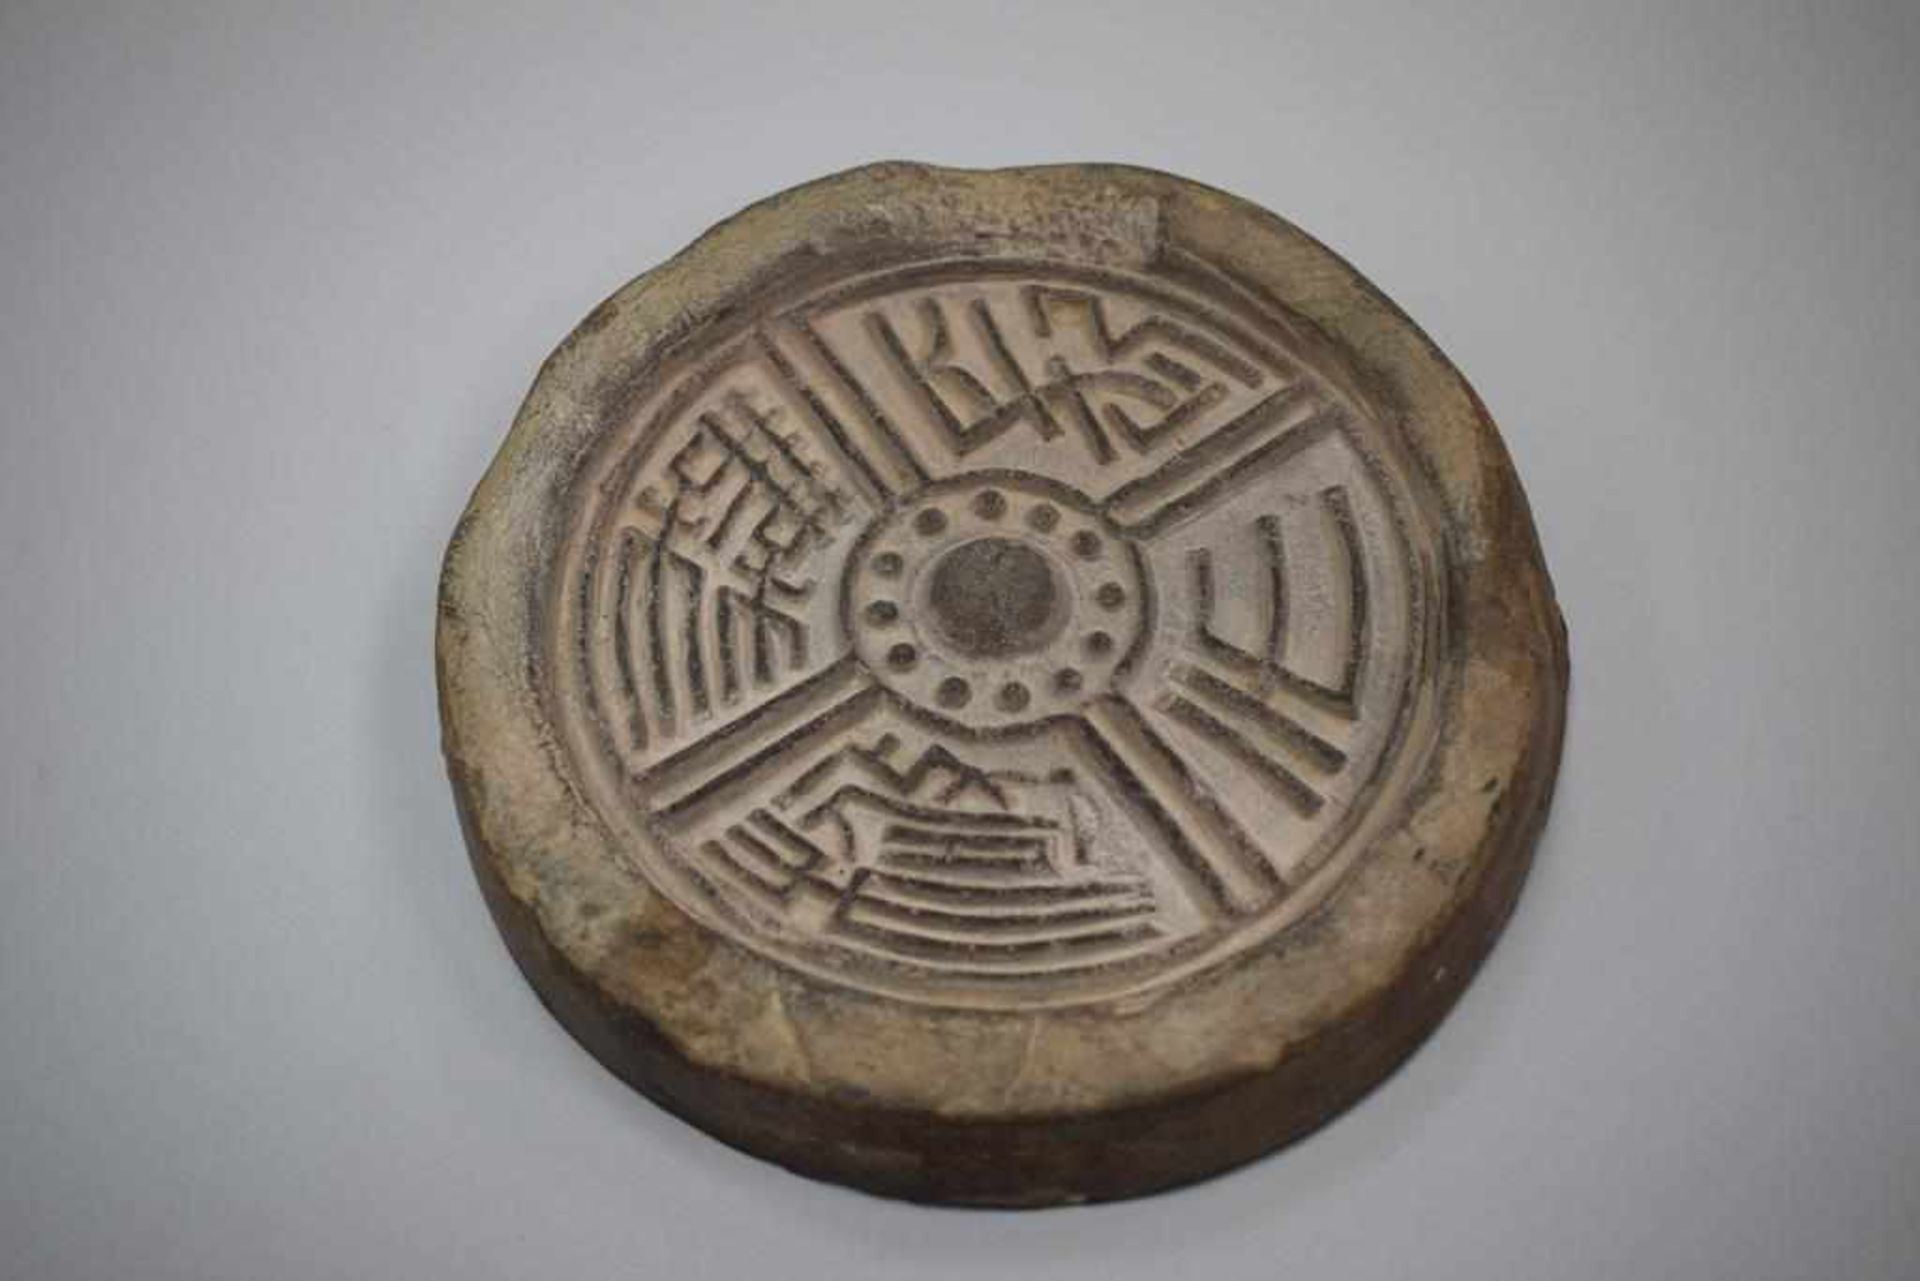 Dachziegel China um 1850Dachziegel rund mit Muster, Alter um 1850, Material: Ton, Rückseitig alte